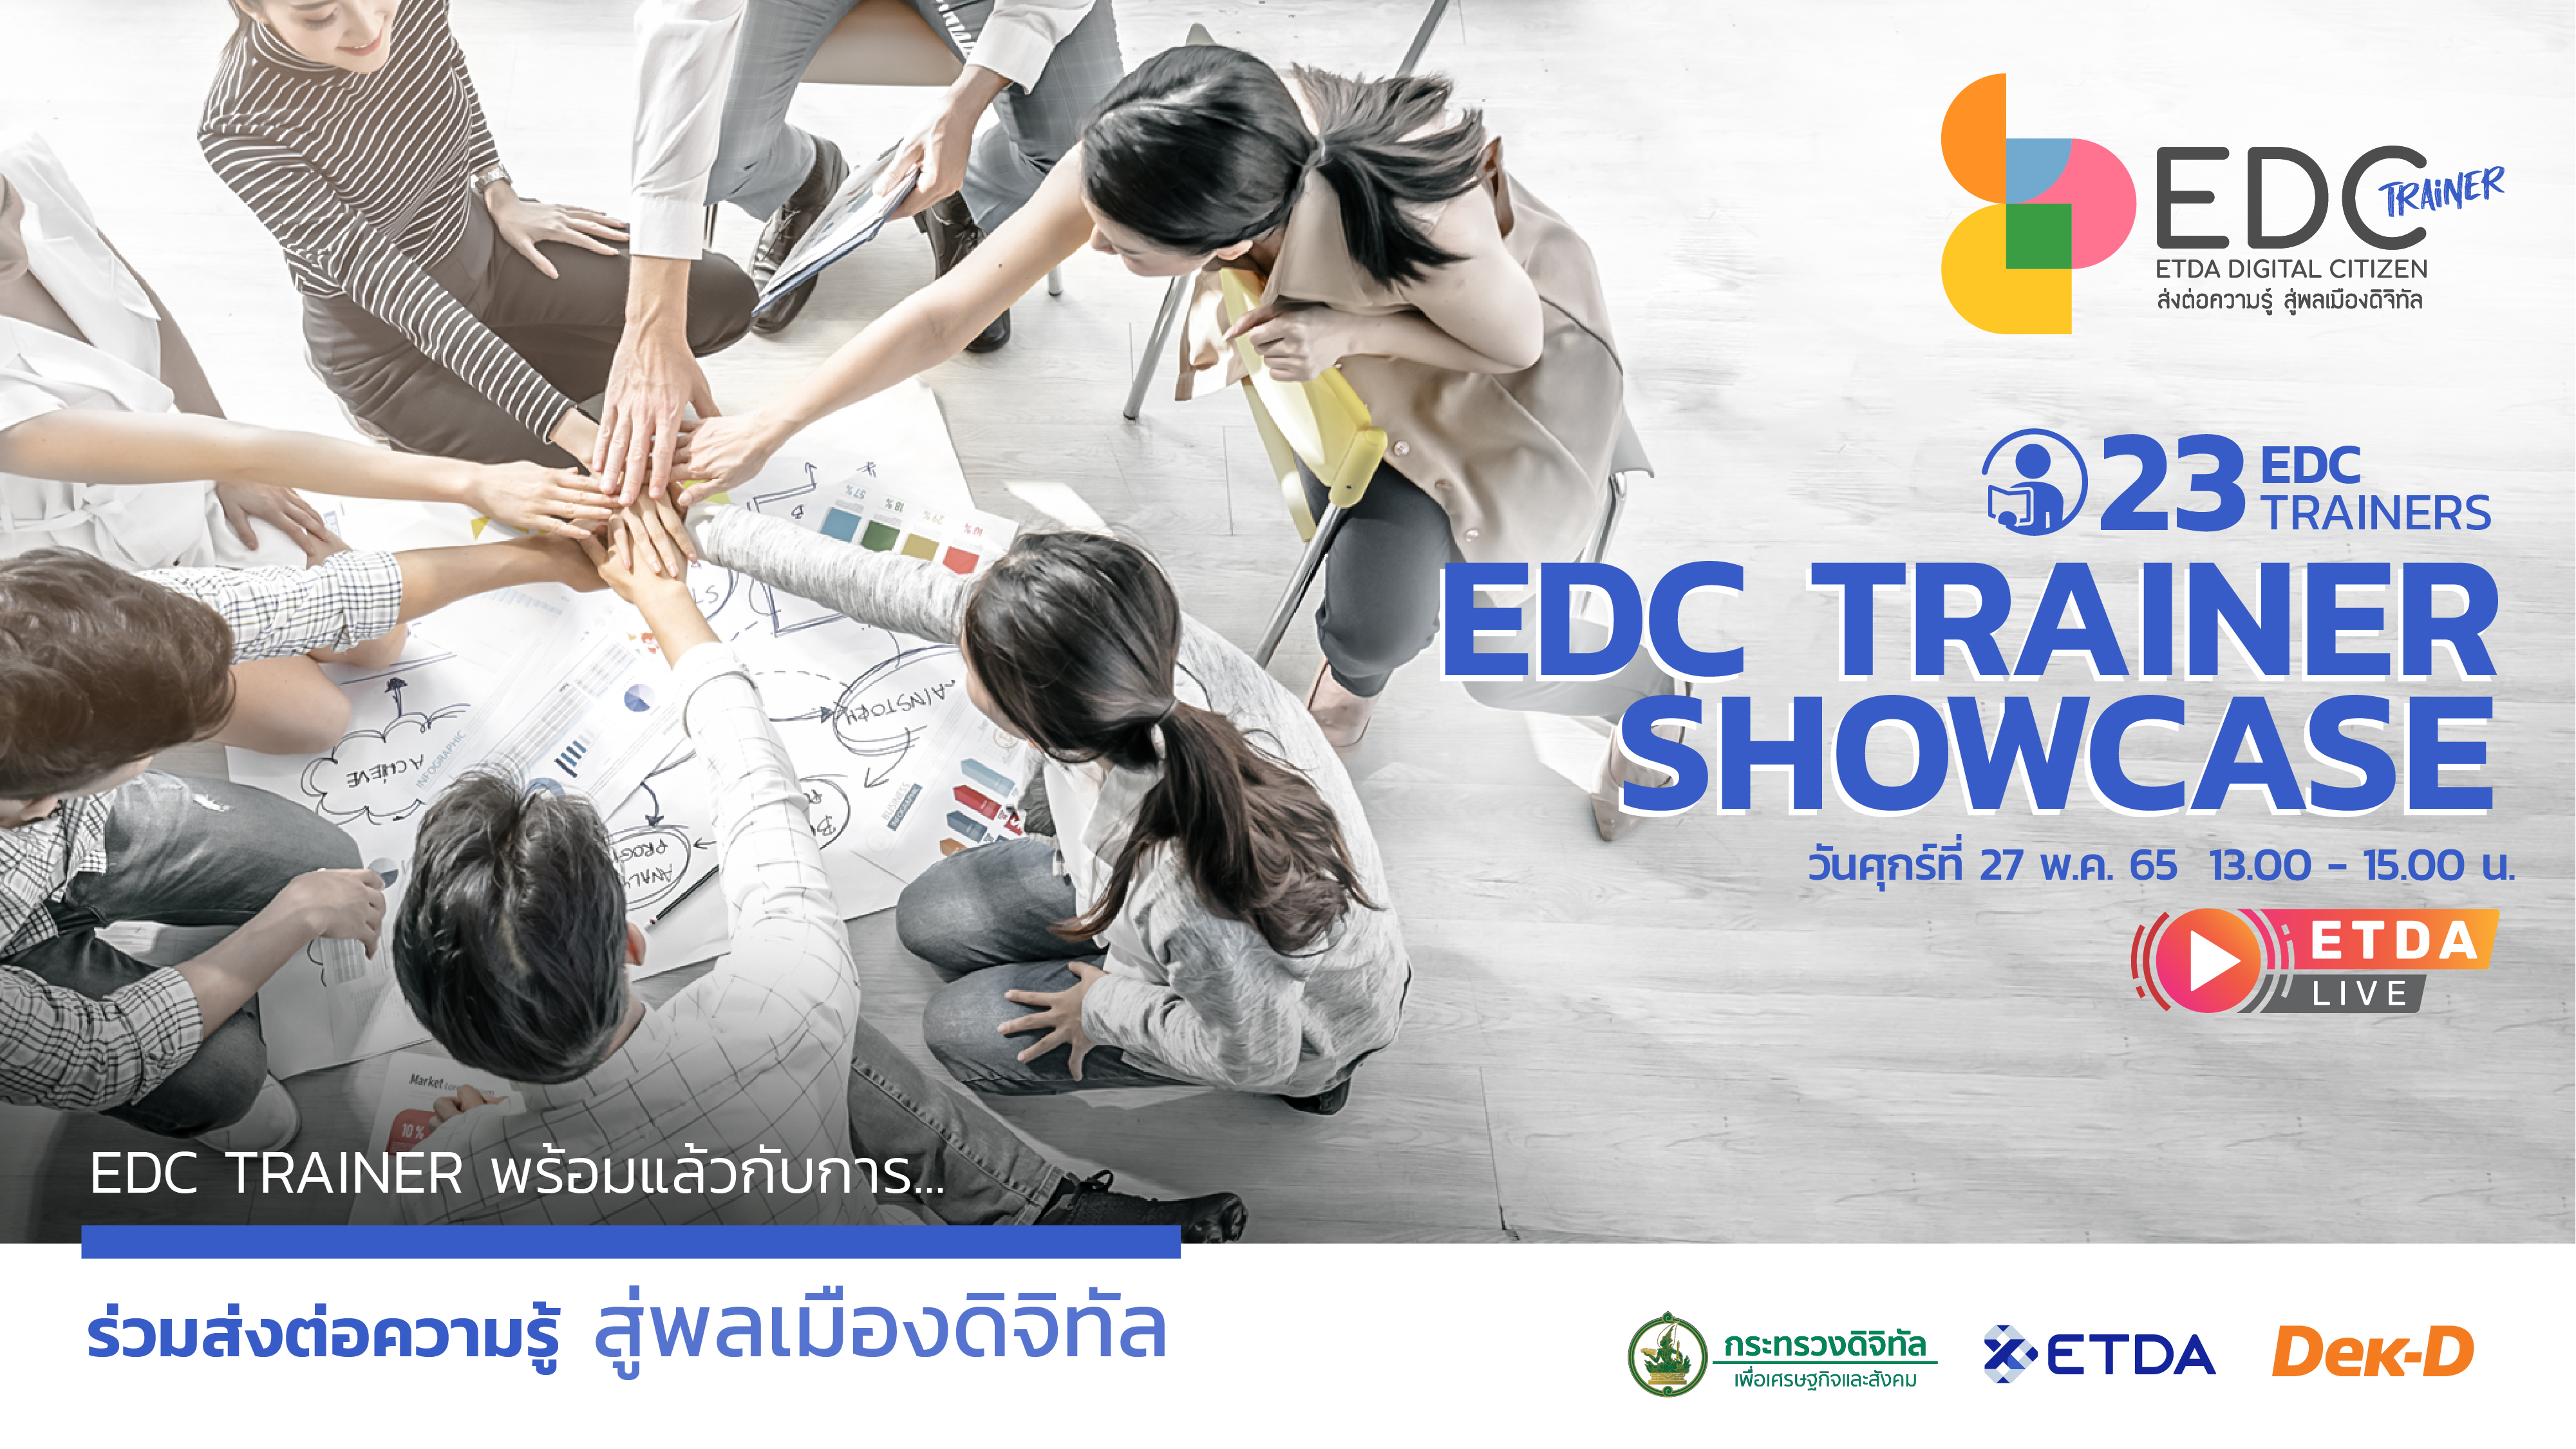 ETDA จัด EDC Trainer Showcase เปิดโฉม 23 EDC Trainers รุ่นแรก  ก่อนลุยขยายเครือข่าย สร้างพลเมืองดิจิทัลทั่วไทย